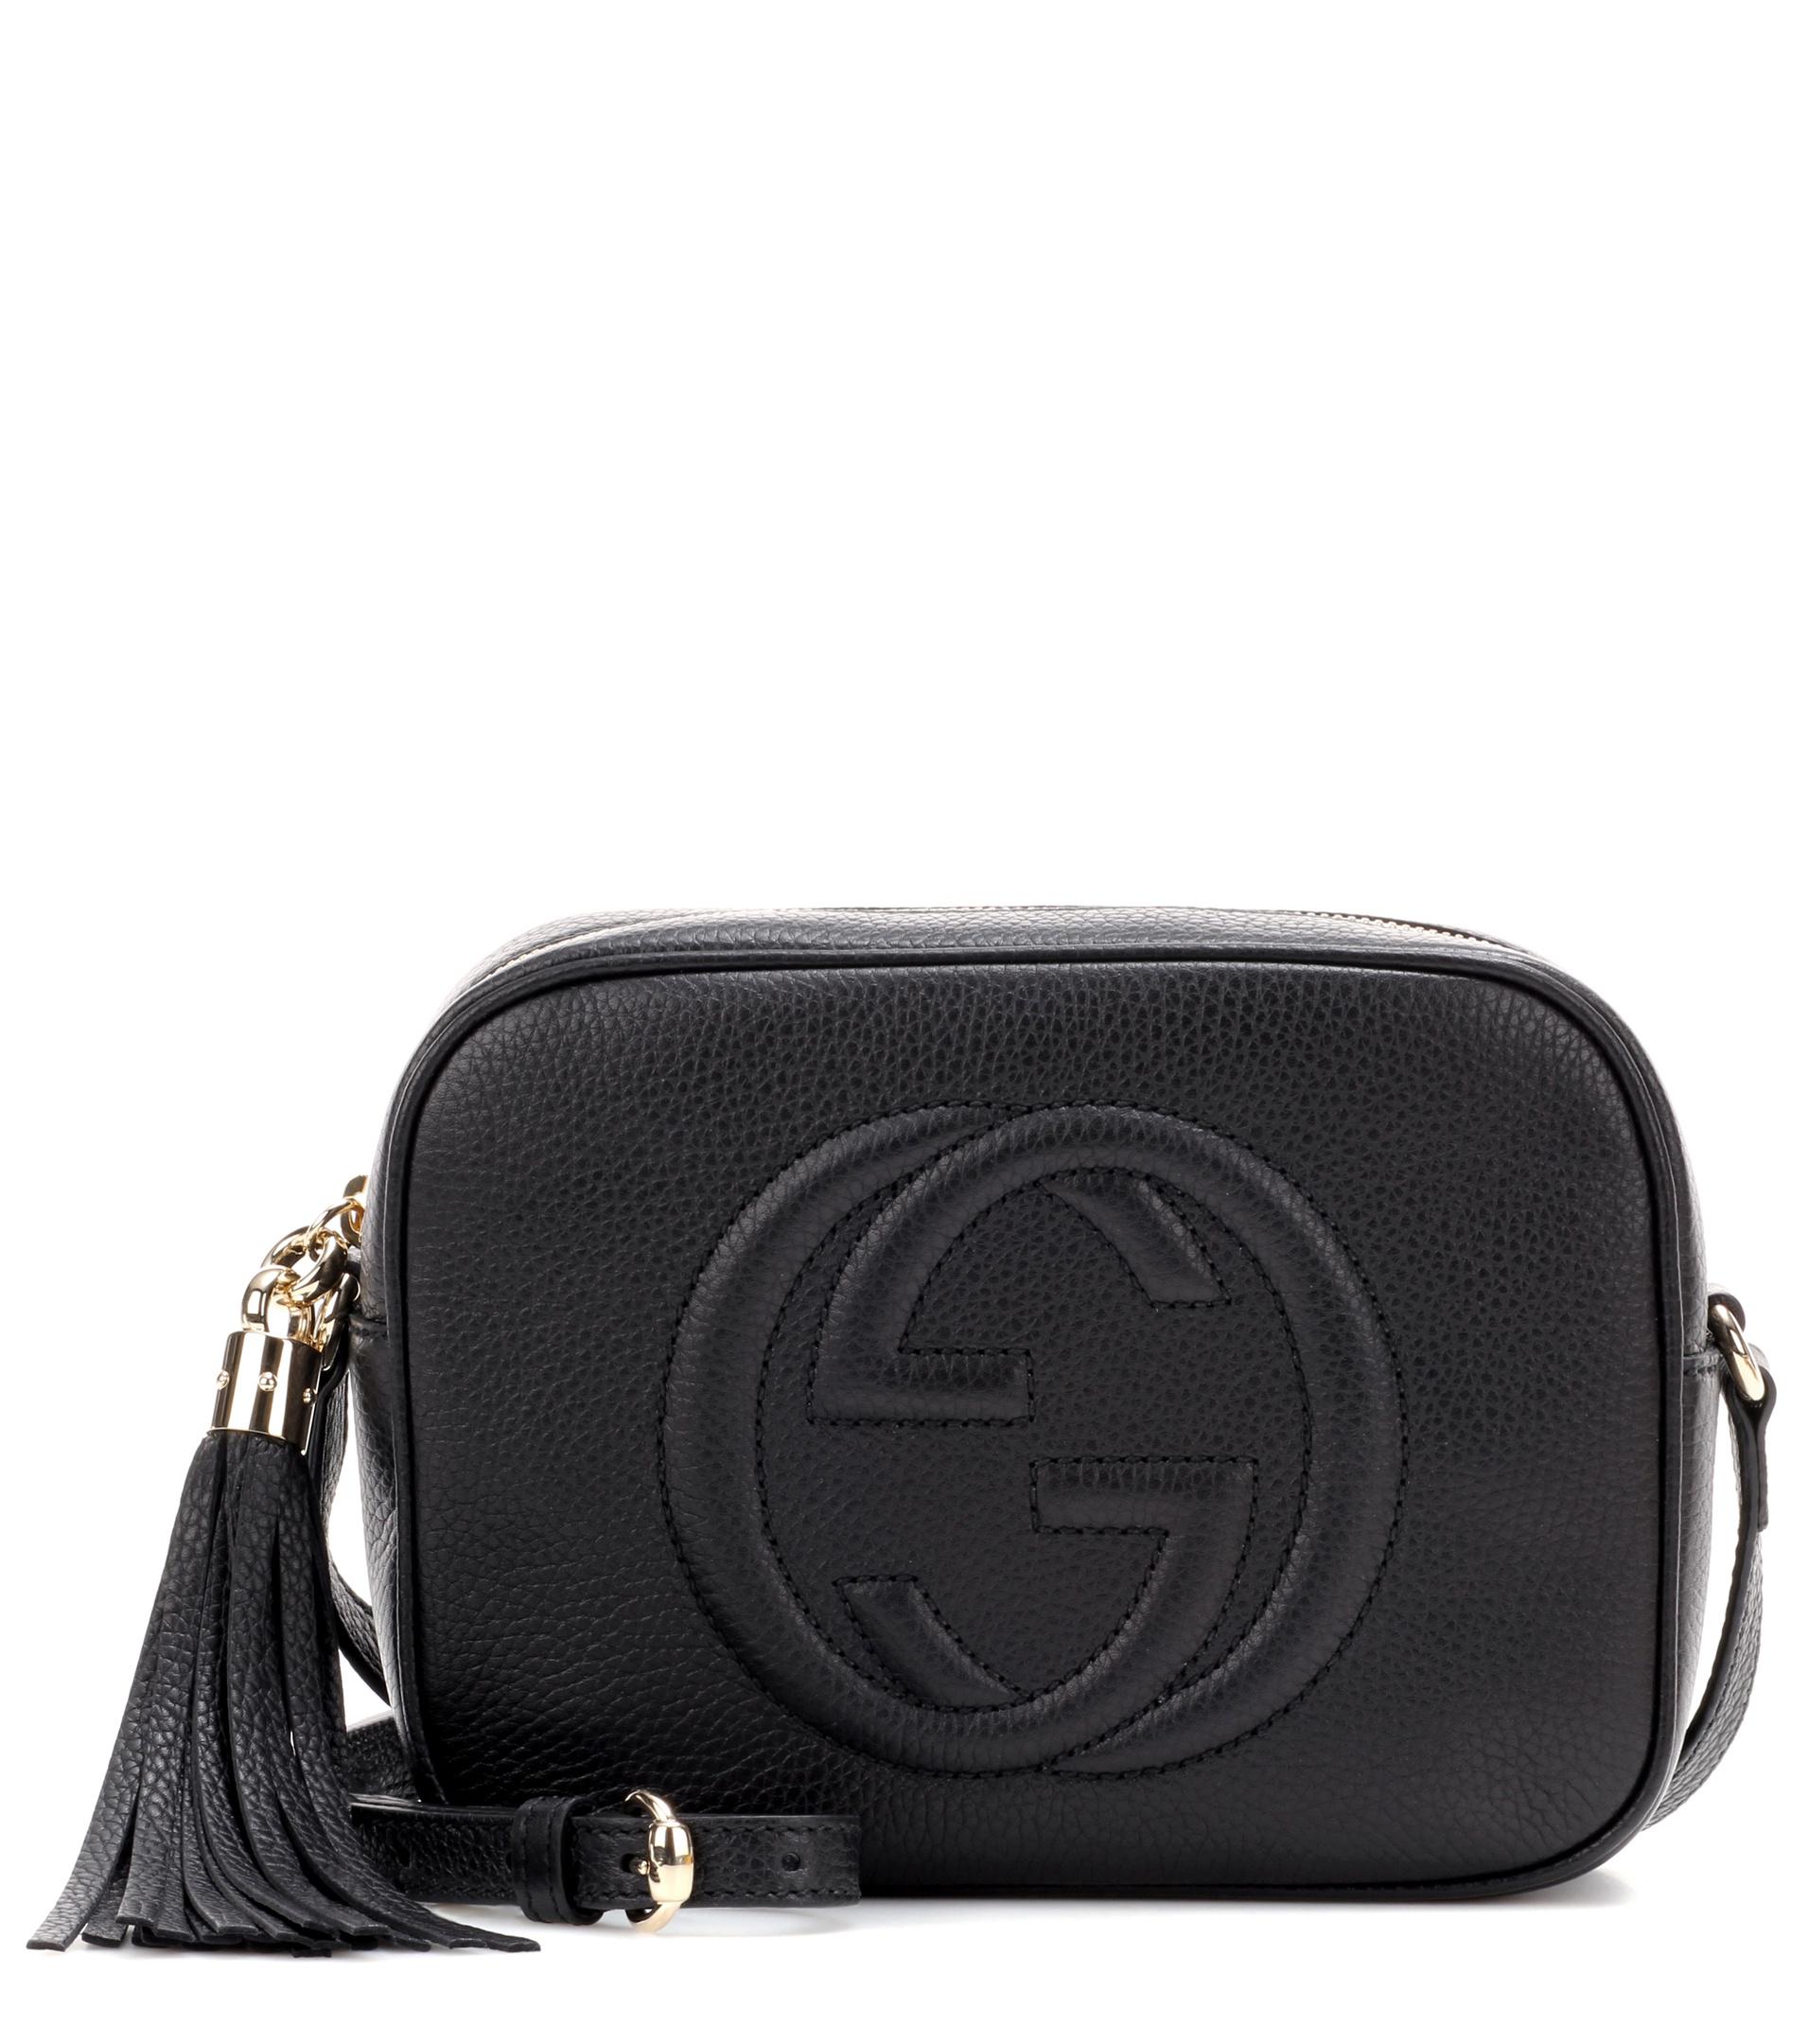 Gucci Marmont GG Mini Matelassé Leather Cross-body Bag in Black - Save 18% - Lyst